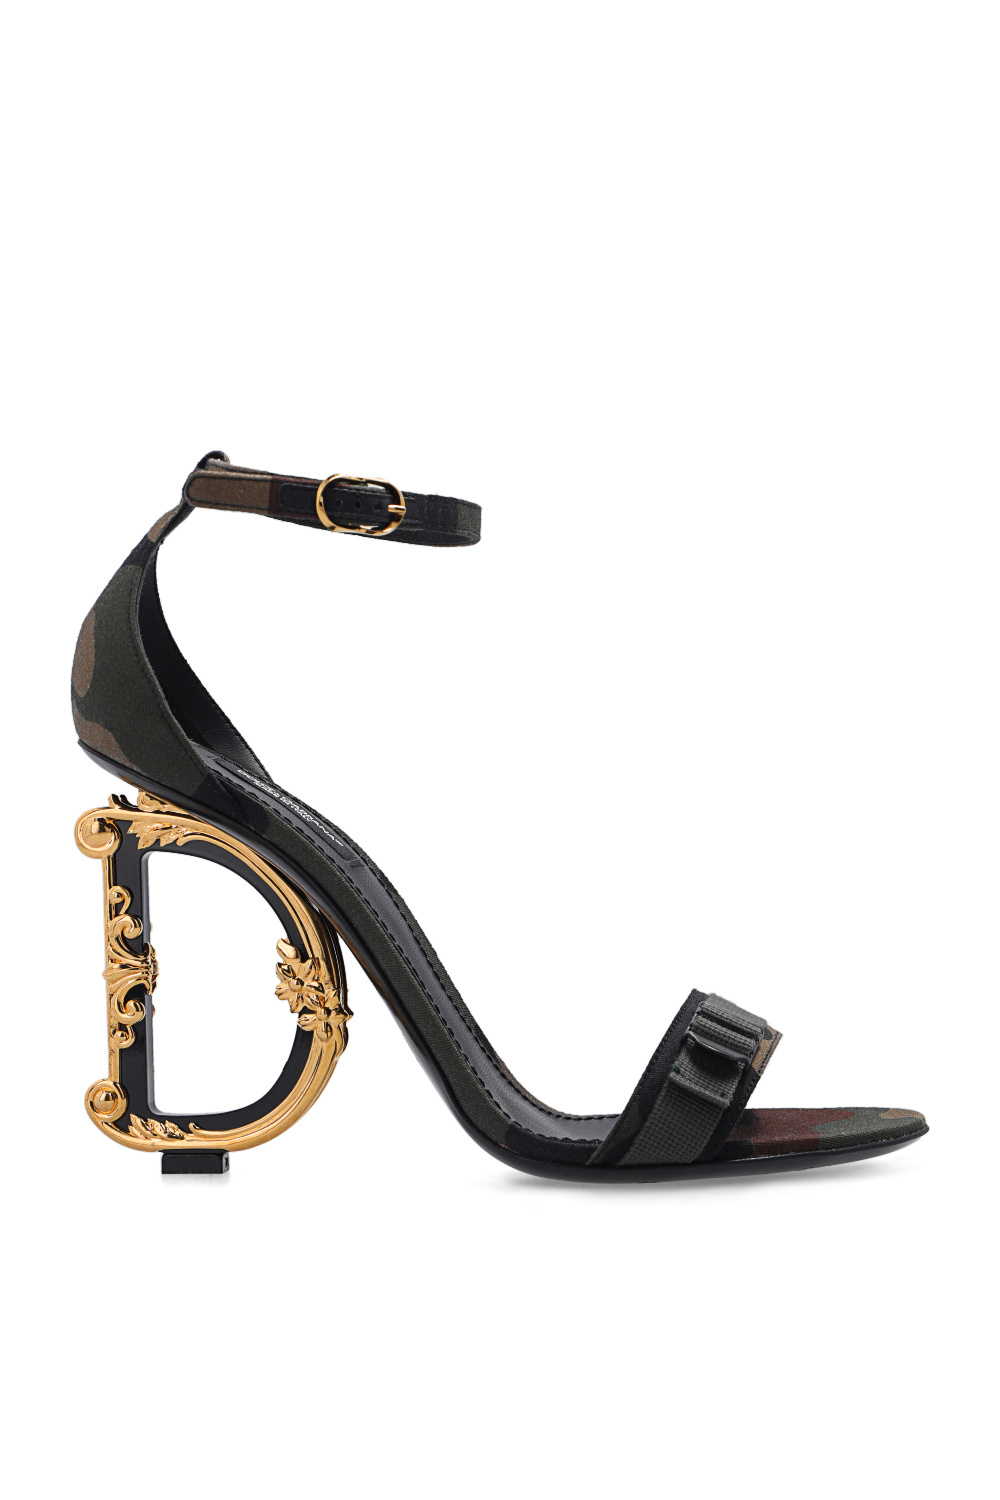 Dolce & Gabbana ribbed cotton vest ‘Keira’ heeled sandals